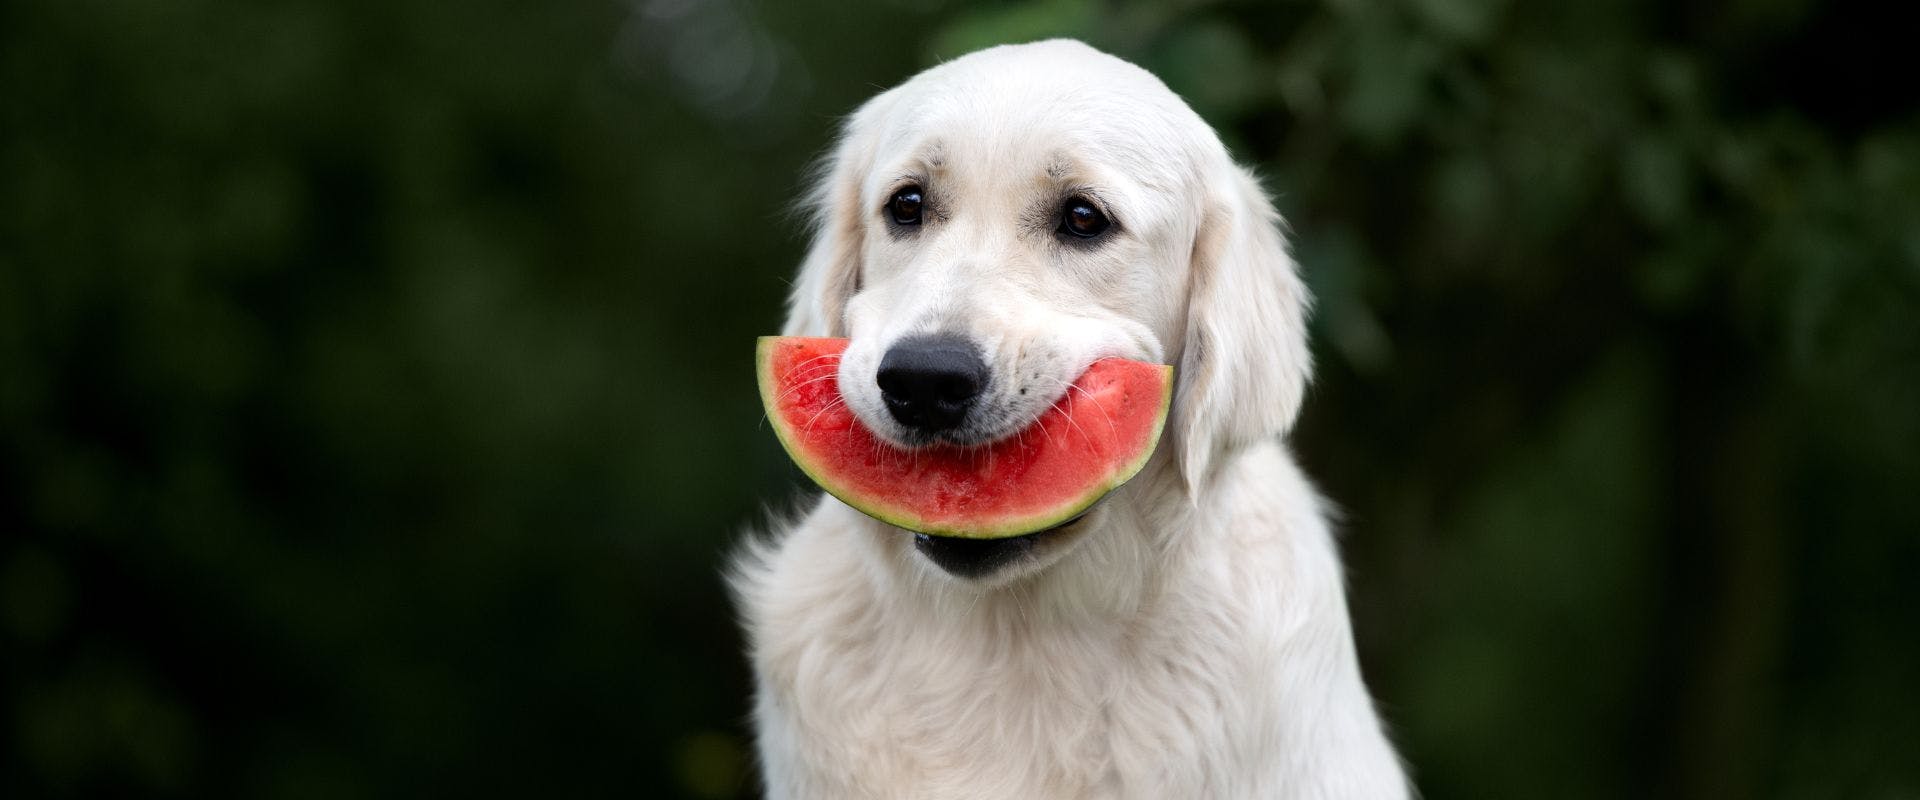 Golden Retriever dog eating watermelon